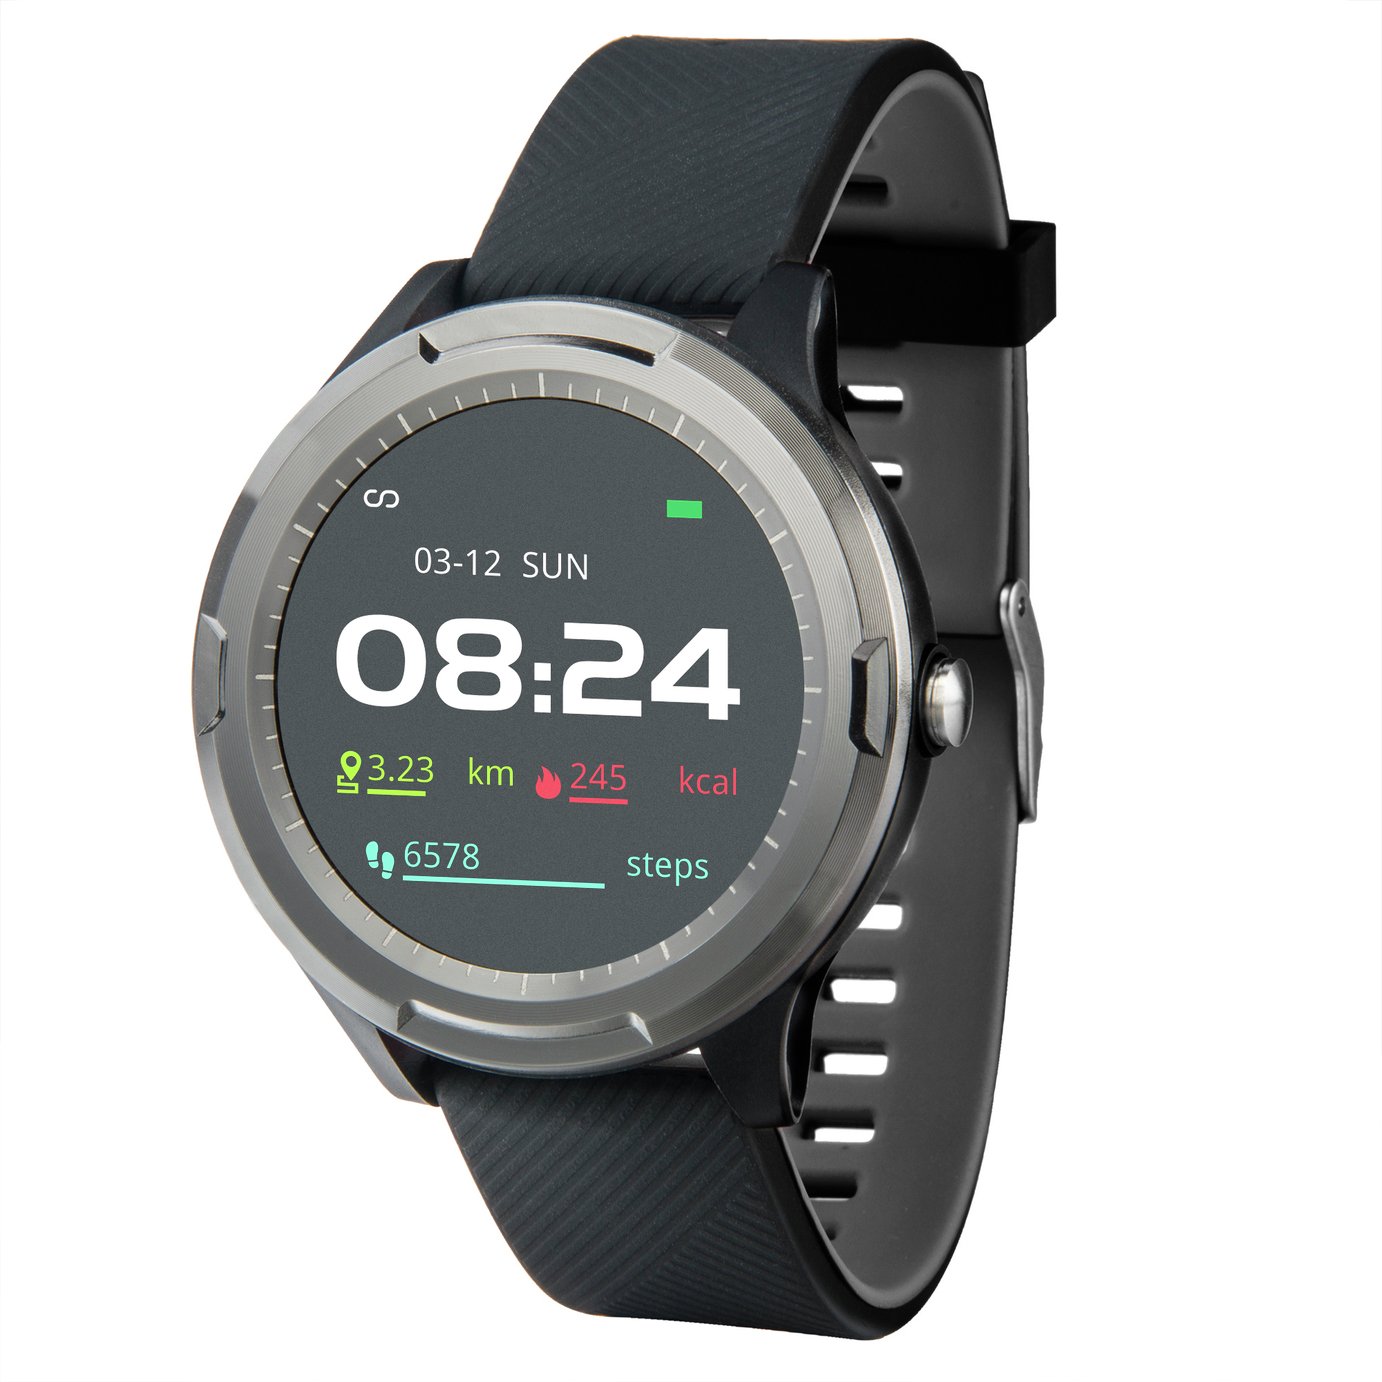 Nuband Optim Smart Watch - Black/Silver